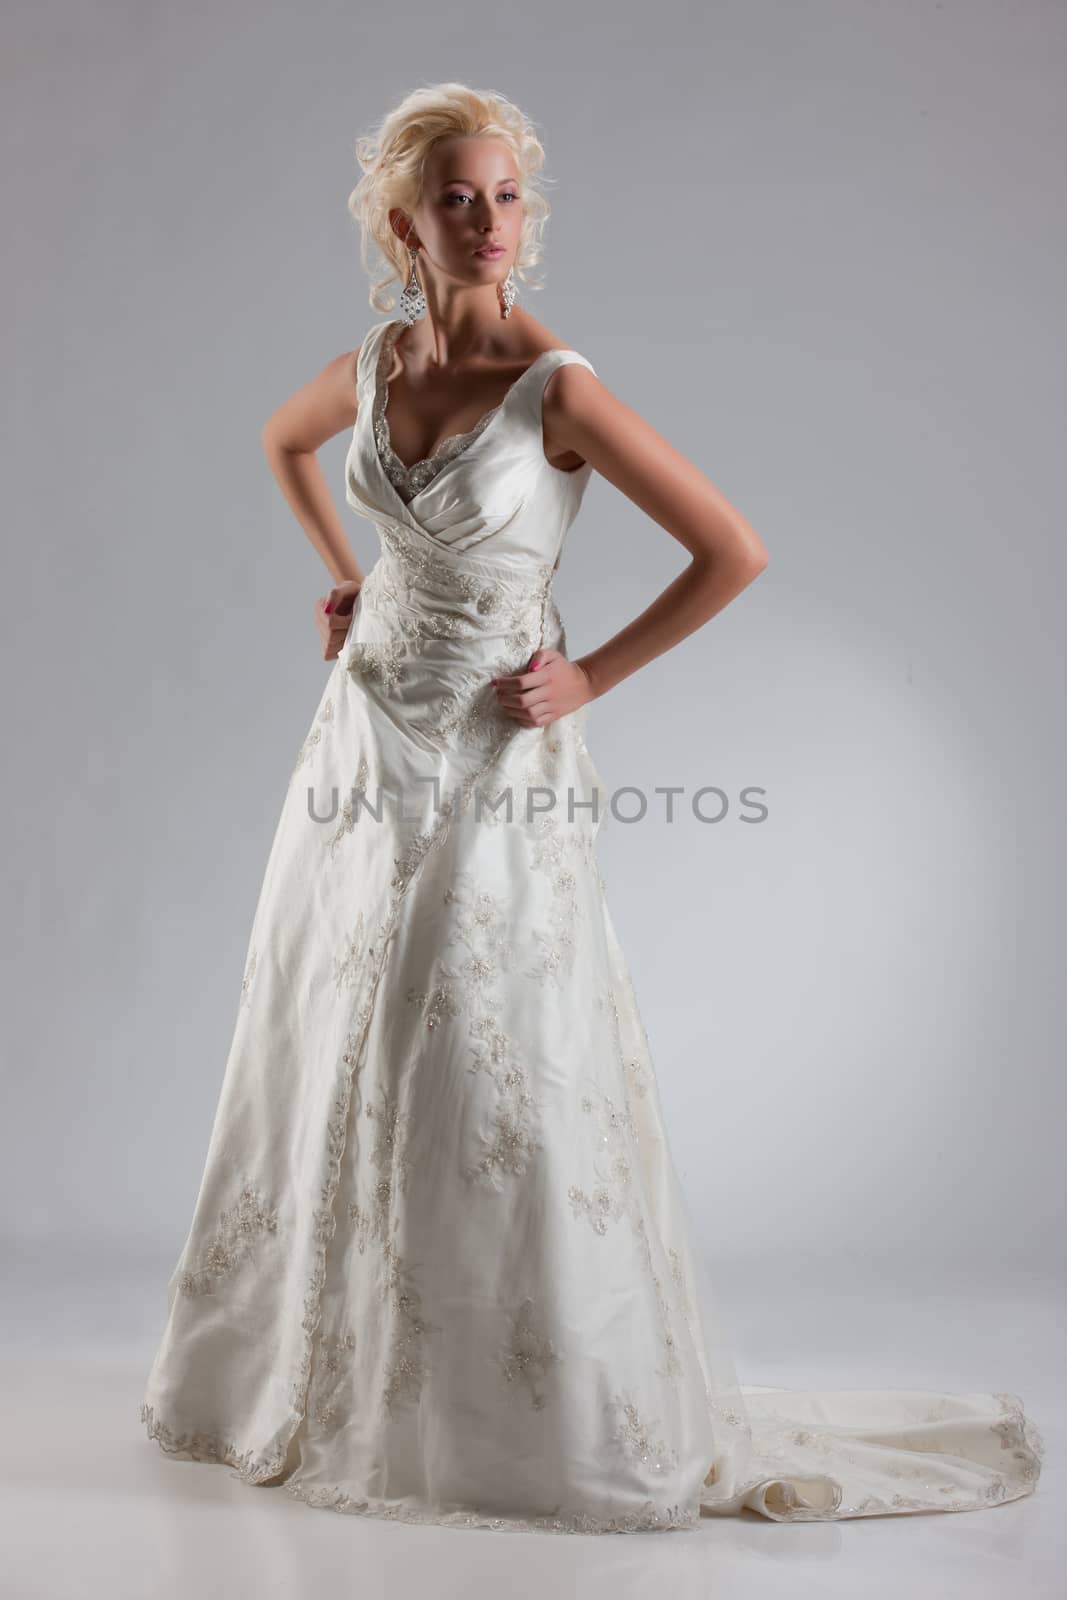 Young beautiful blonde woman in a fashionable wedding dress